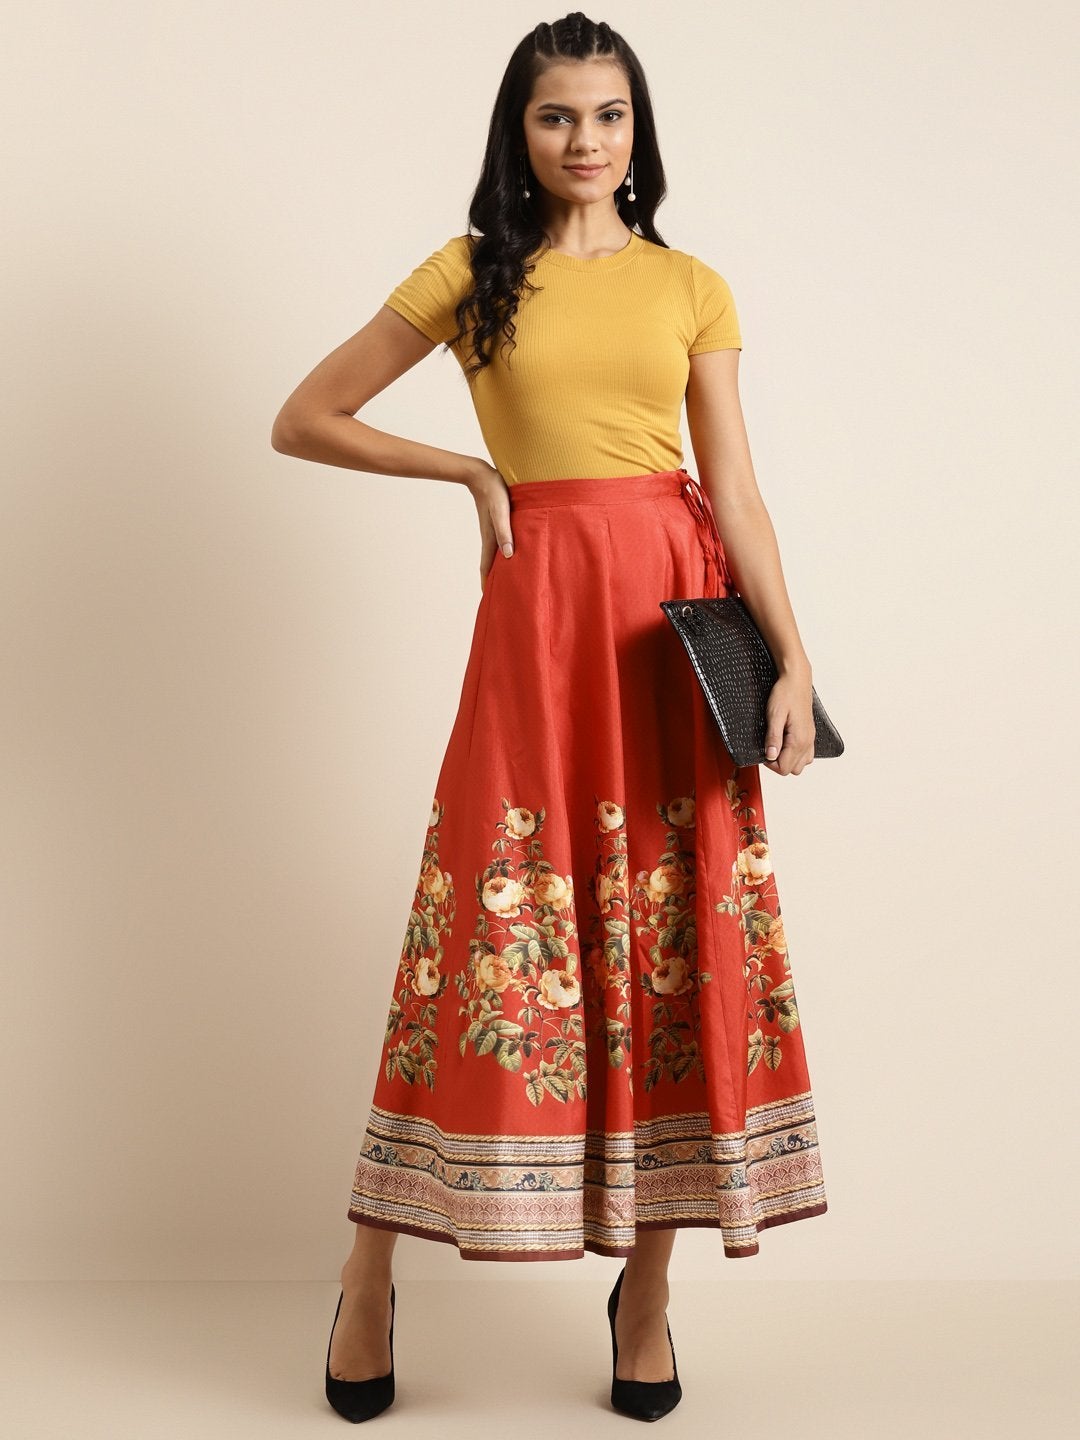 Women's Red Floral Kali Skirt - SHAE